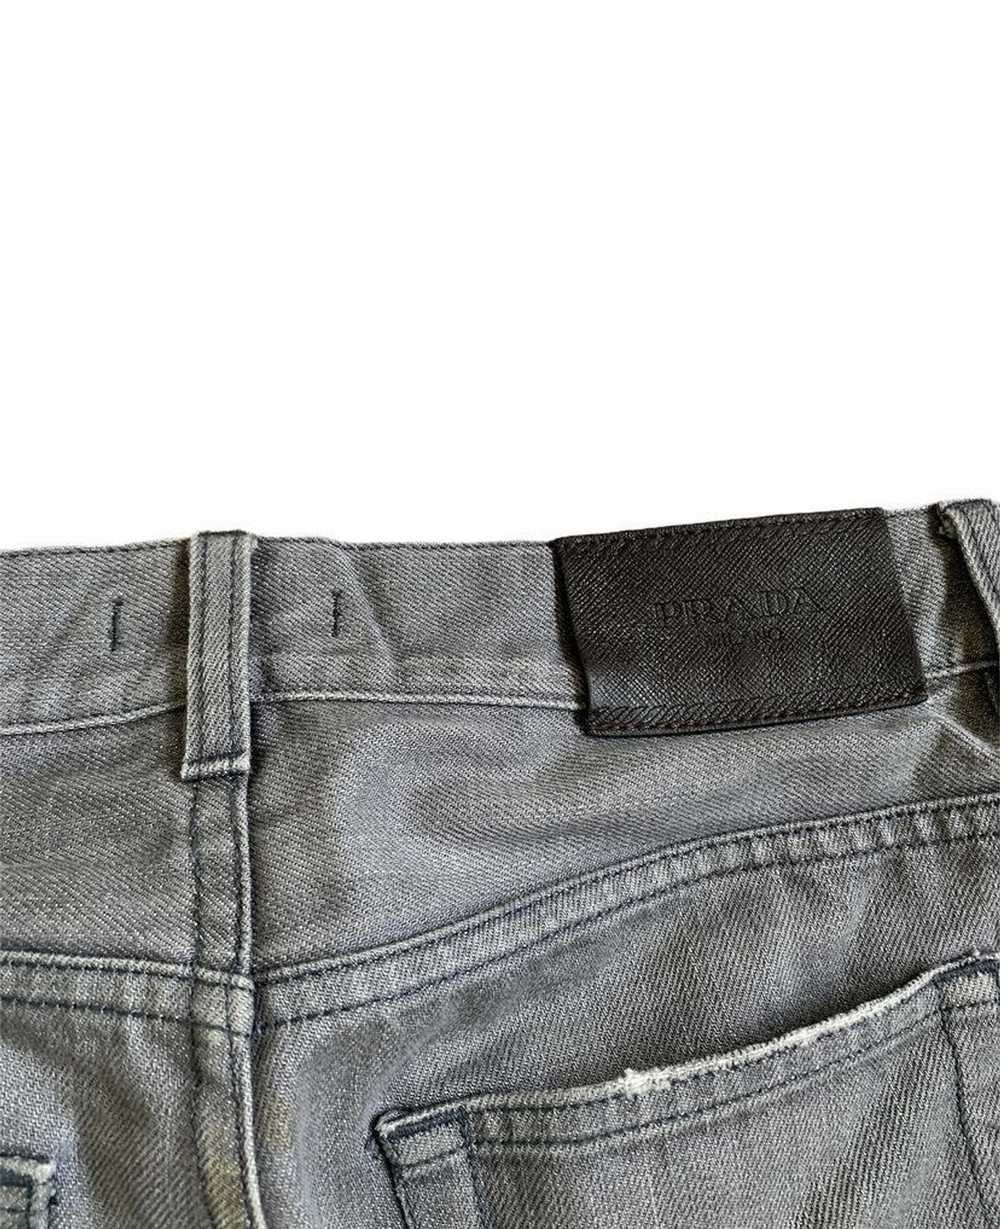 Prada Prada Milano Denim Jeans - image 4